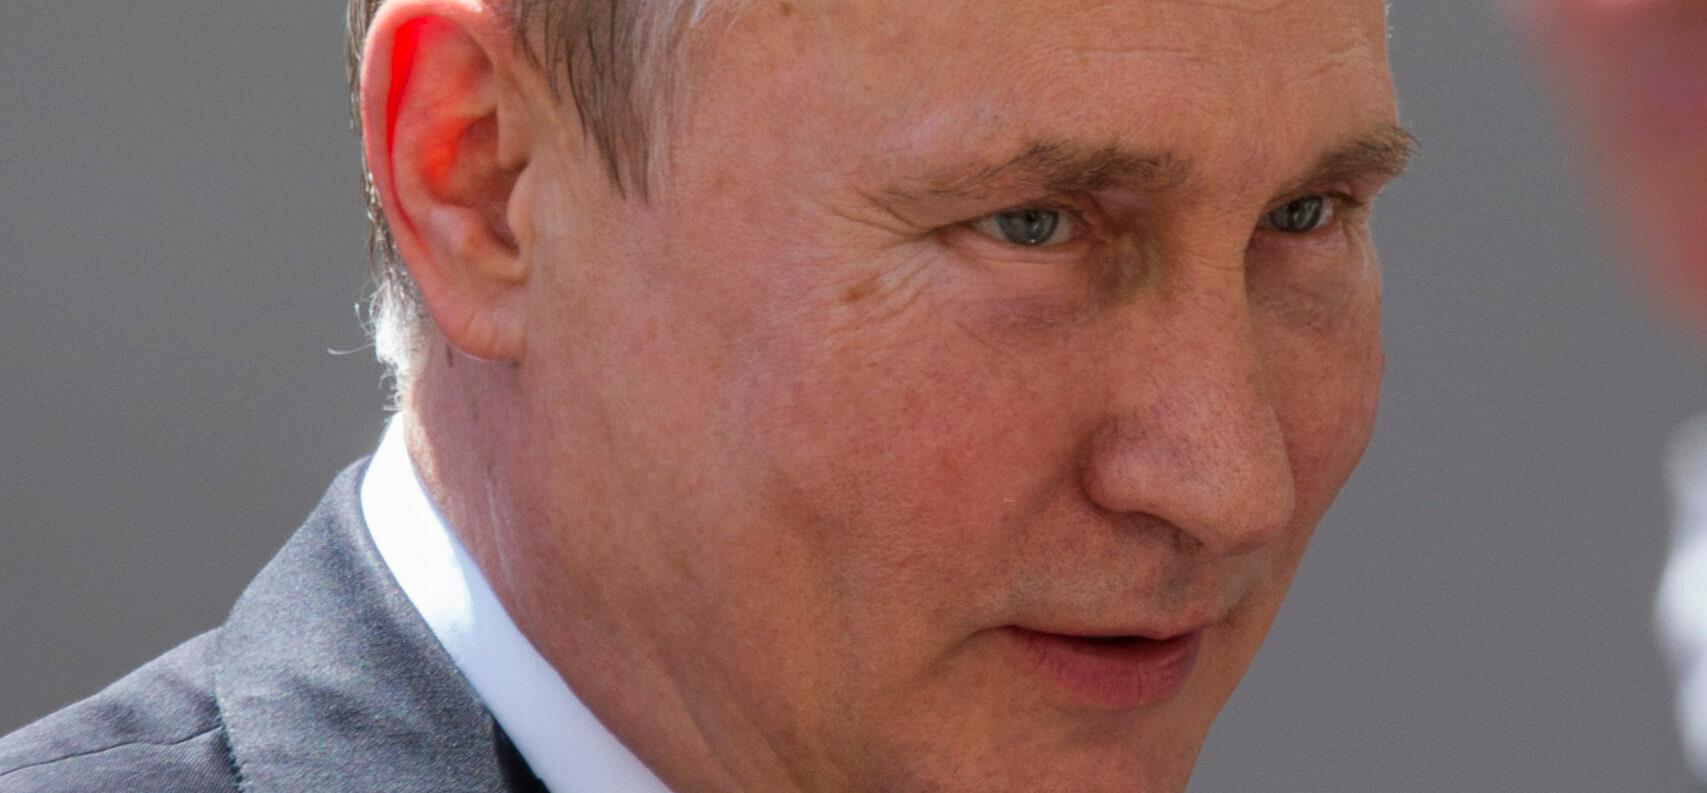 Vladimir Putin looking serious